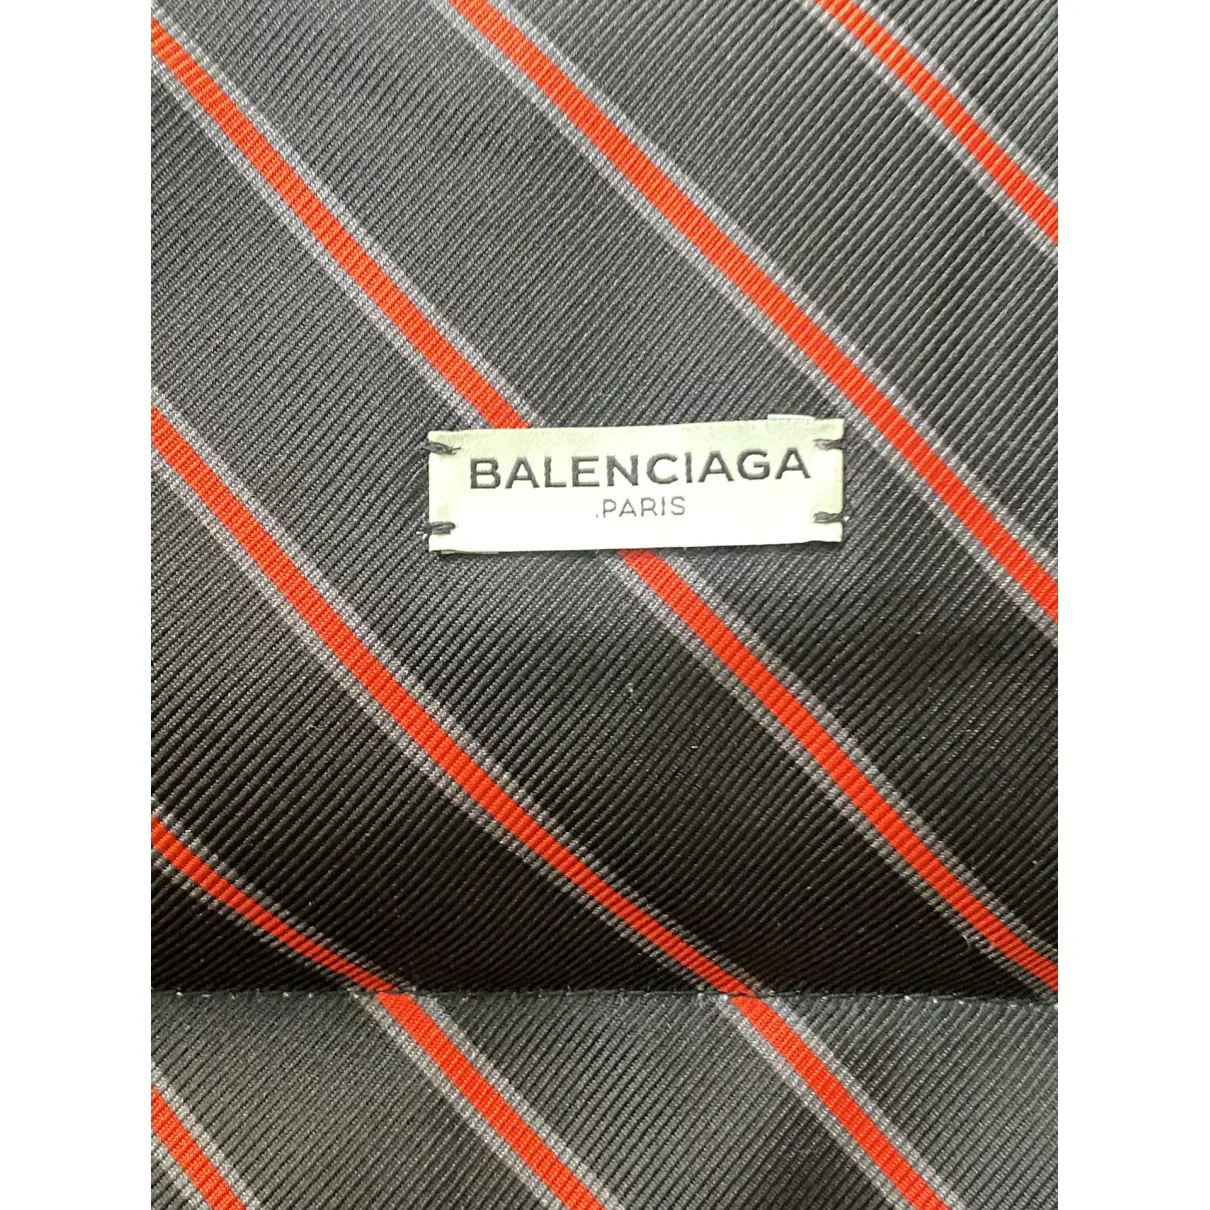 Buy Balenciaga Silk scarf online